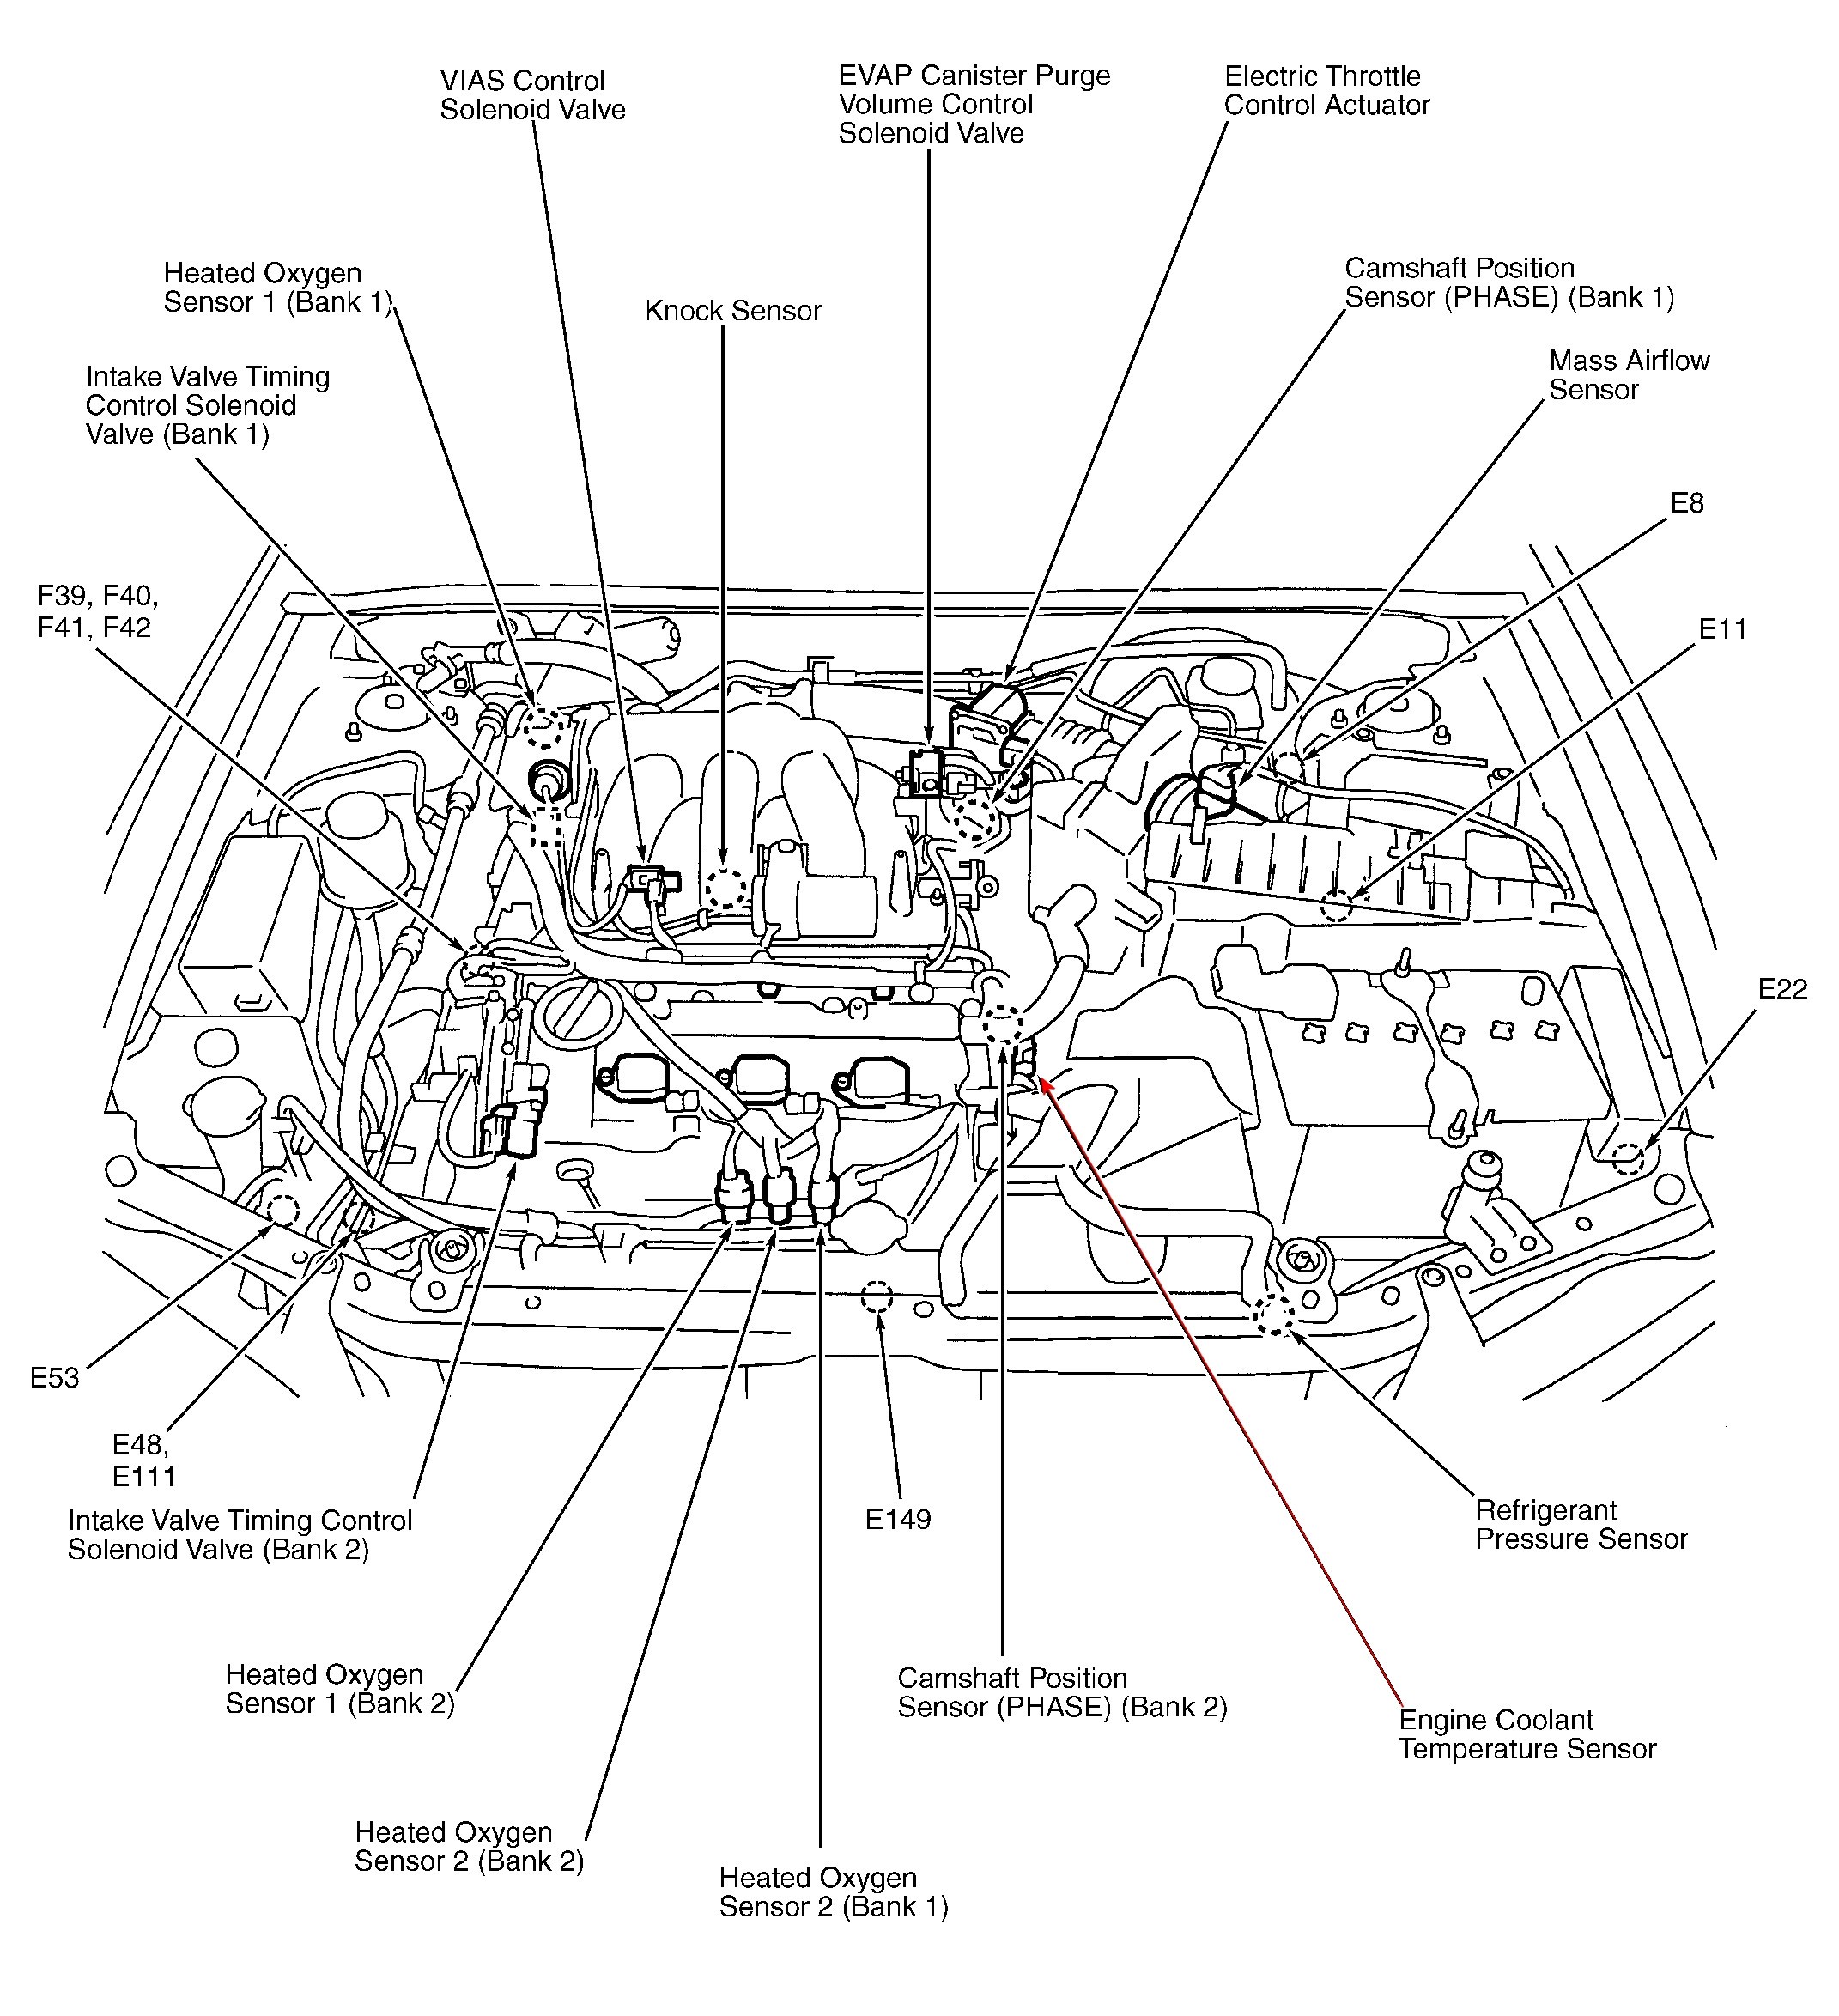 Find Comprehensive Diagram Of Car Parts Car Parts Names with Diagram Pics Of Find Comprehensive Diagram Of Car Parts